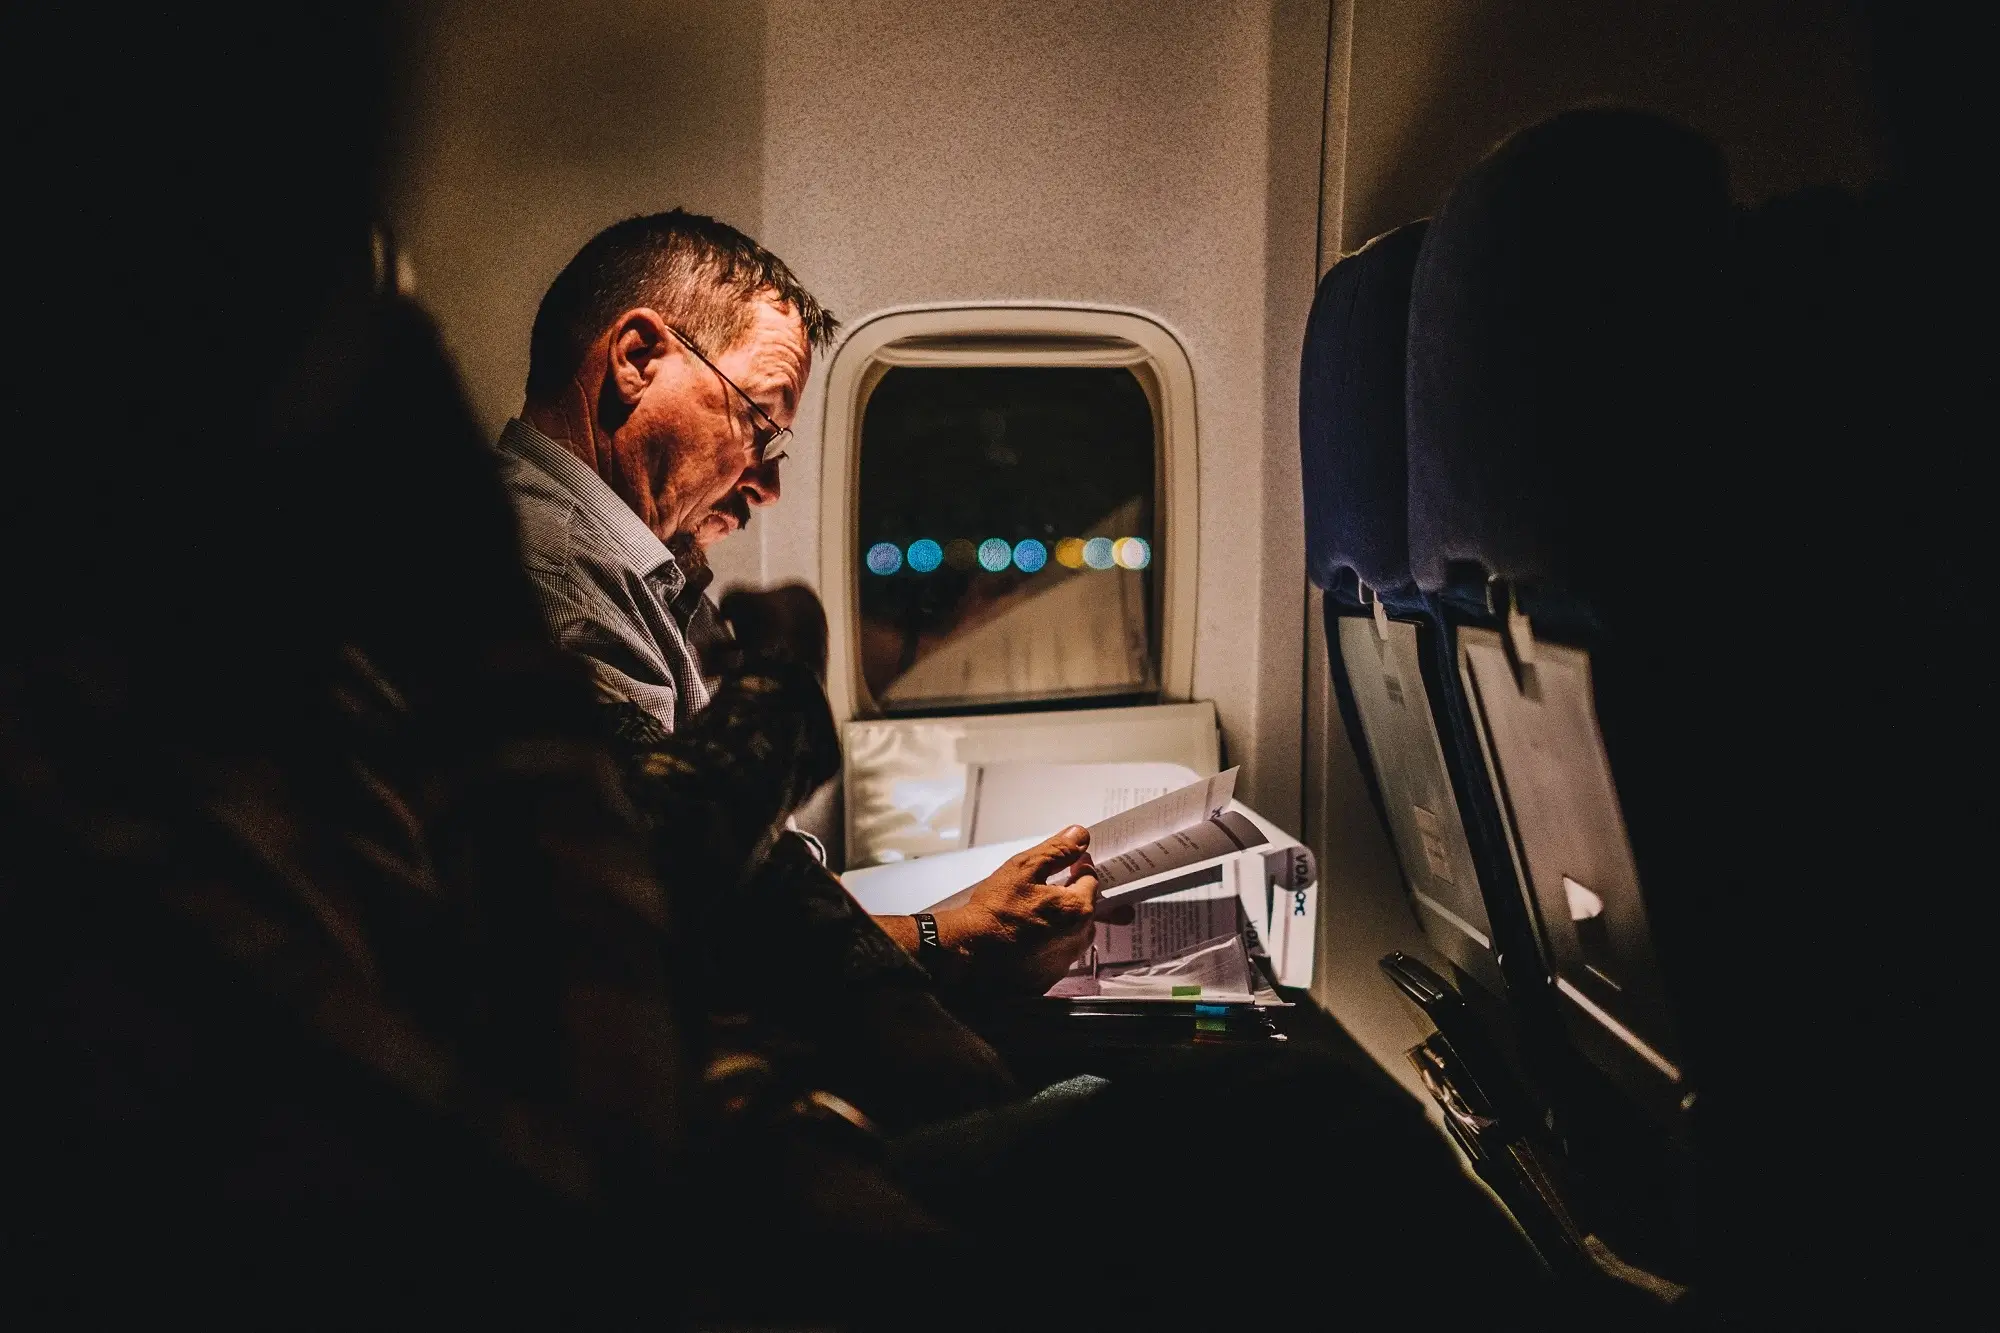 A man on a plane reading.